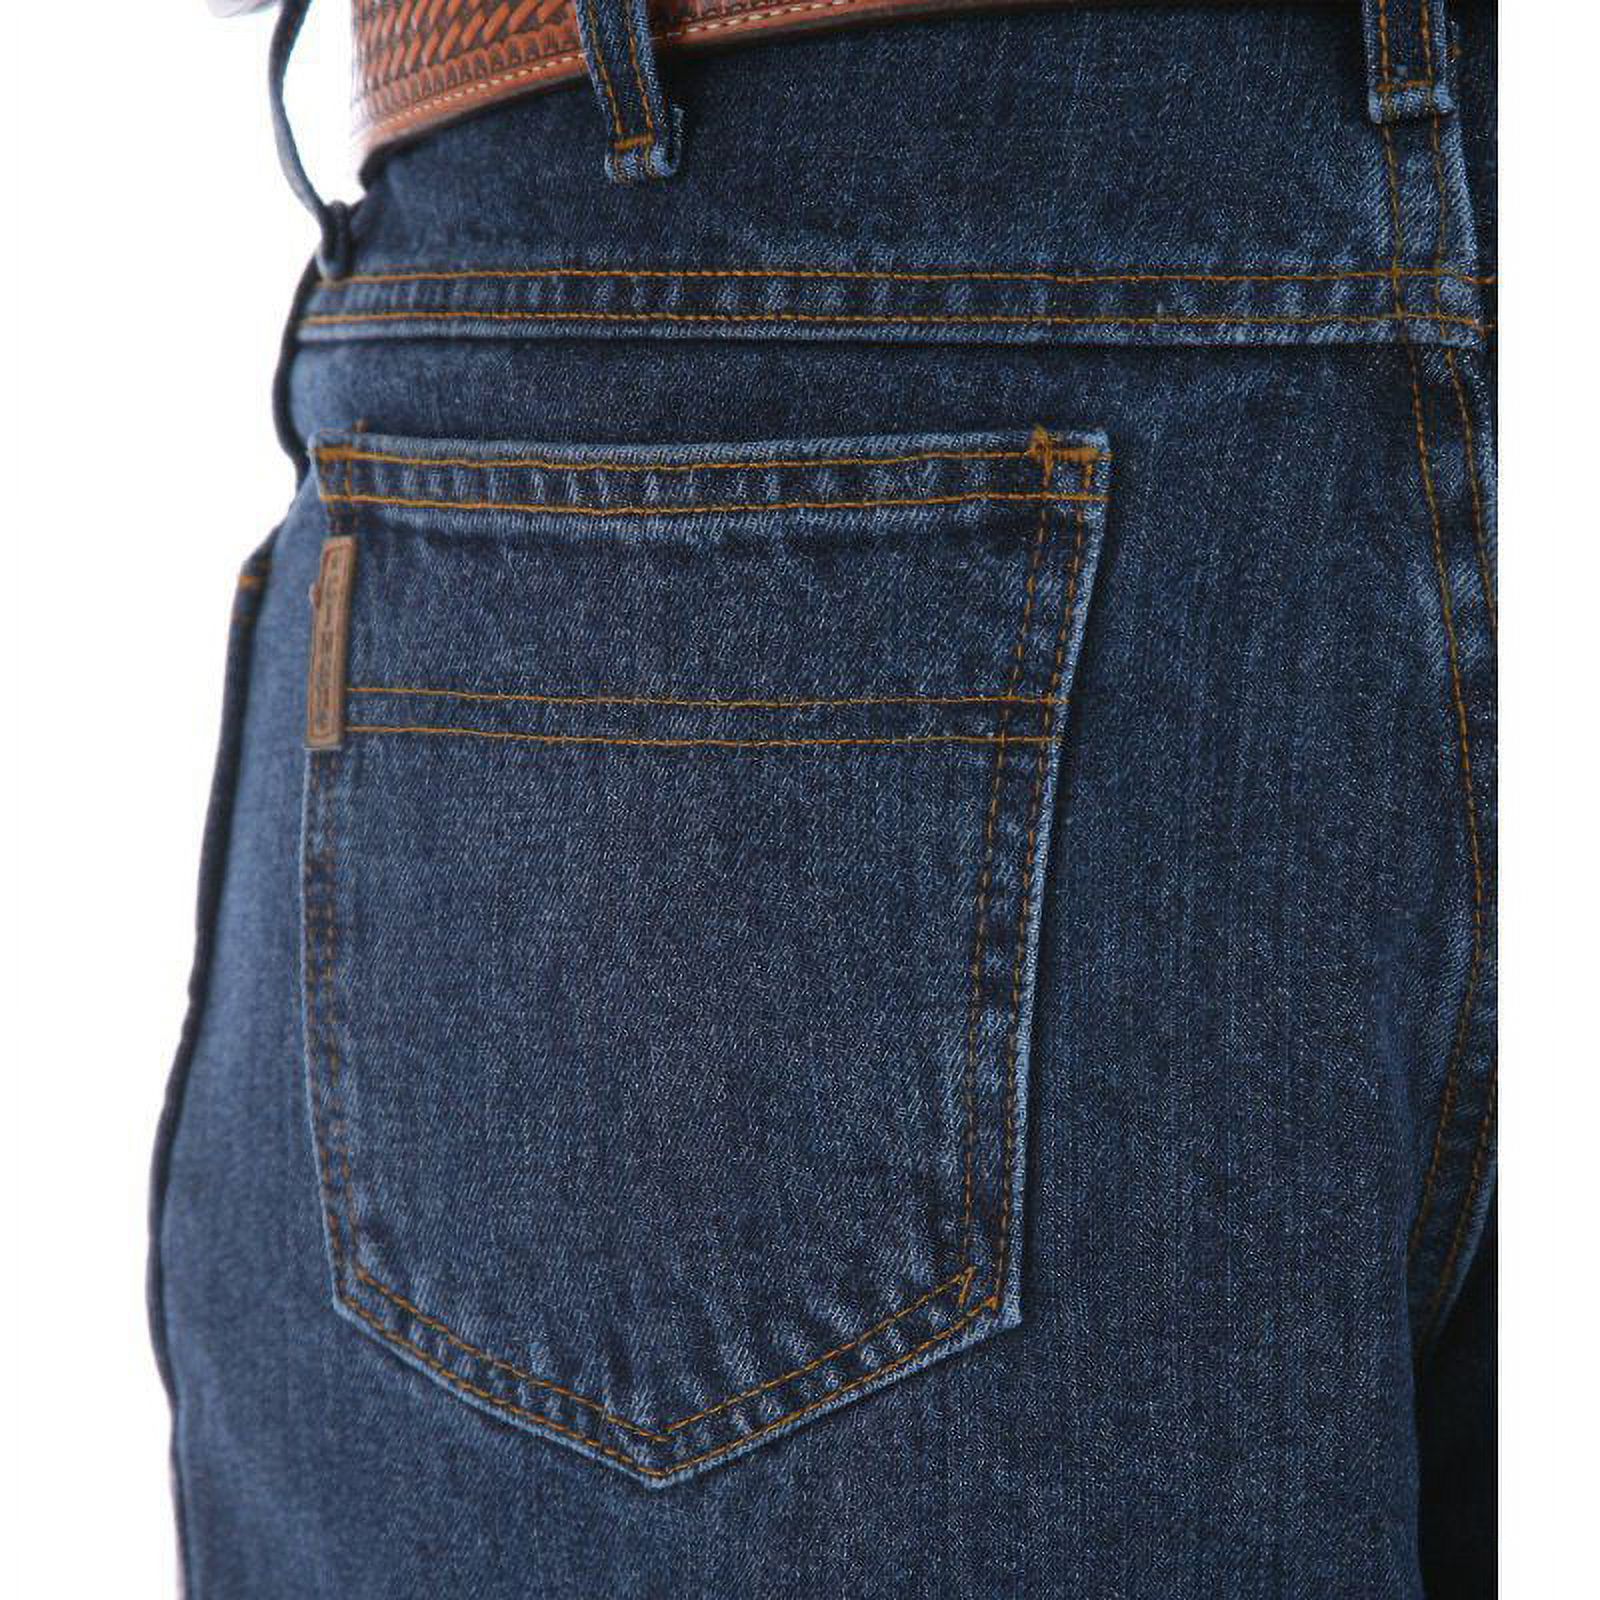 Cinch Apparel Mens Green Label Original Fit Jeans 33W x 40L Dark Stonewash - image 3 of 4